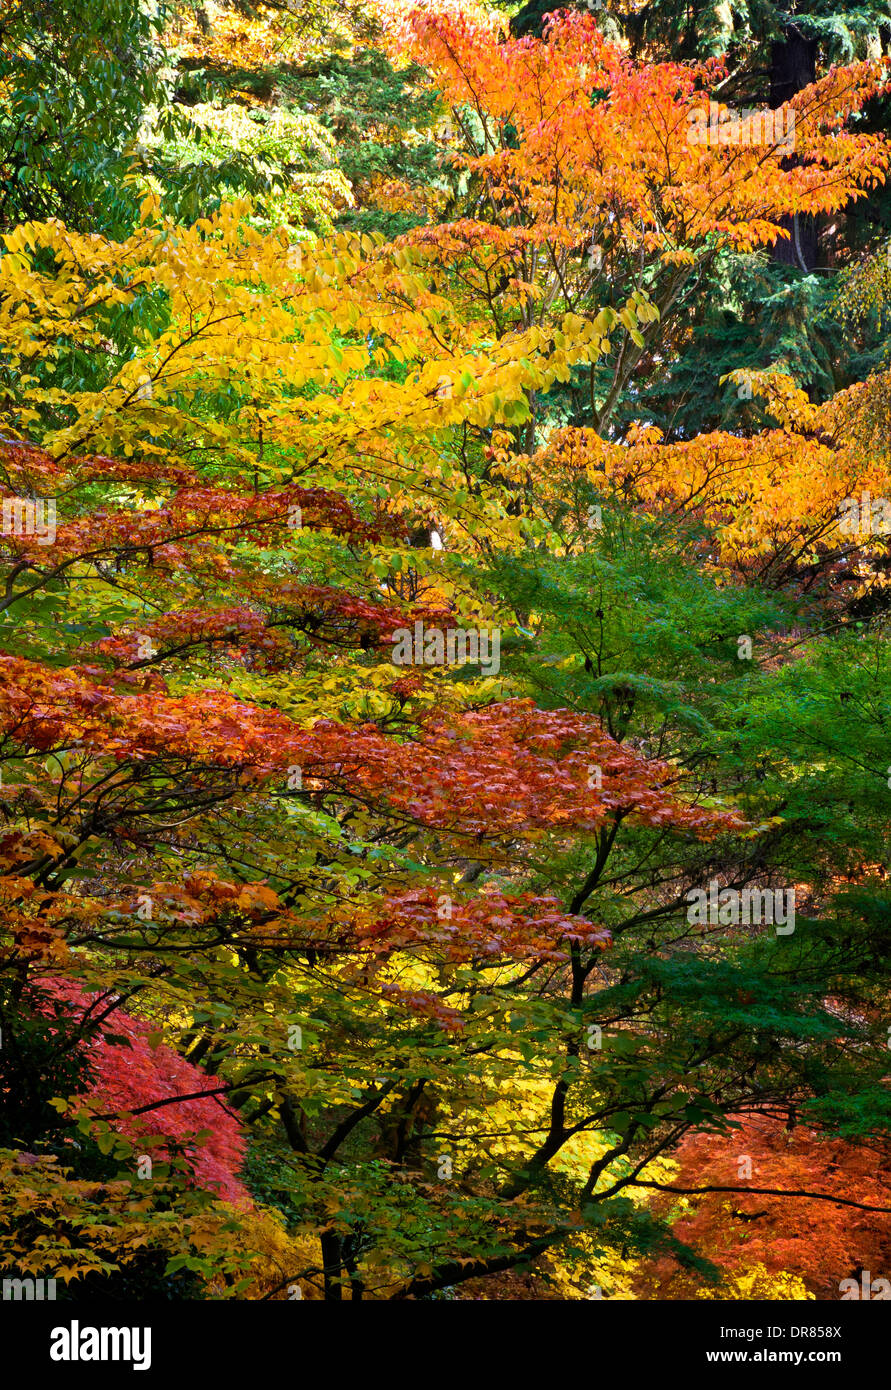 WASHINGTON - Herbstfarben in Seattle Washington Park Arboretum. Stockfoto